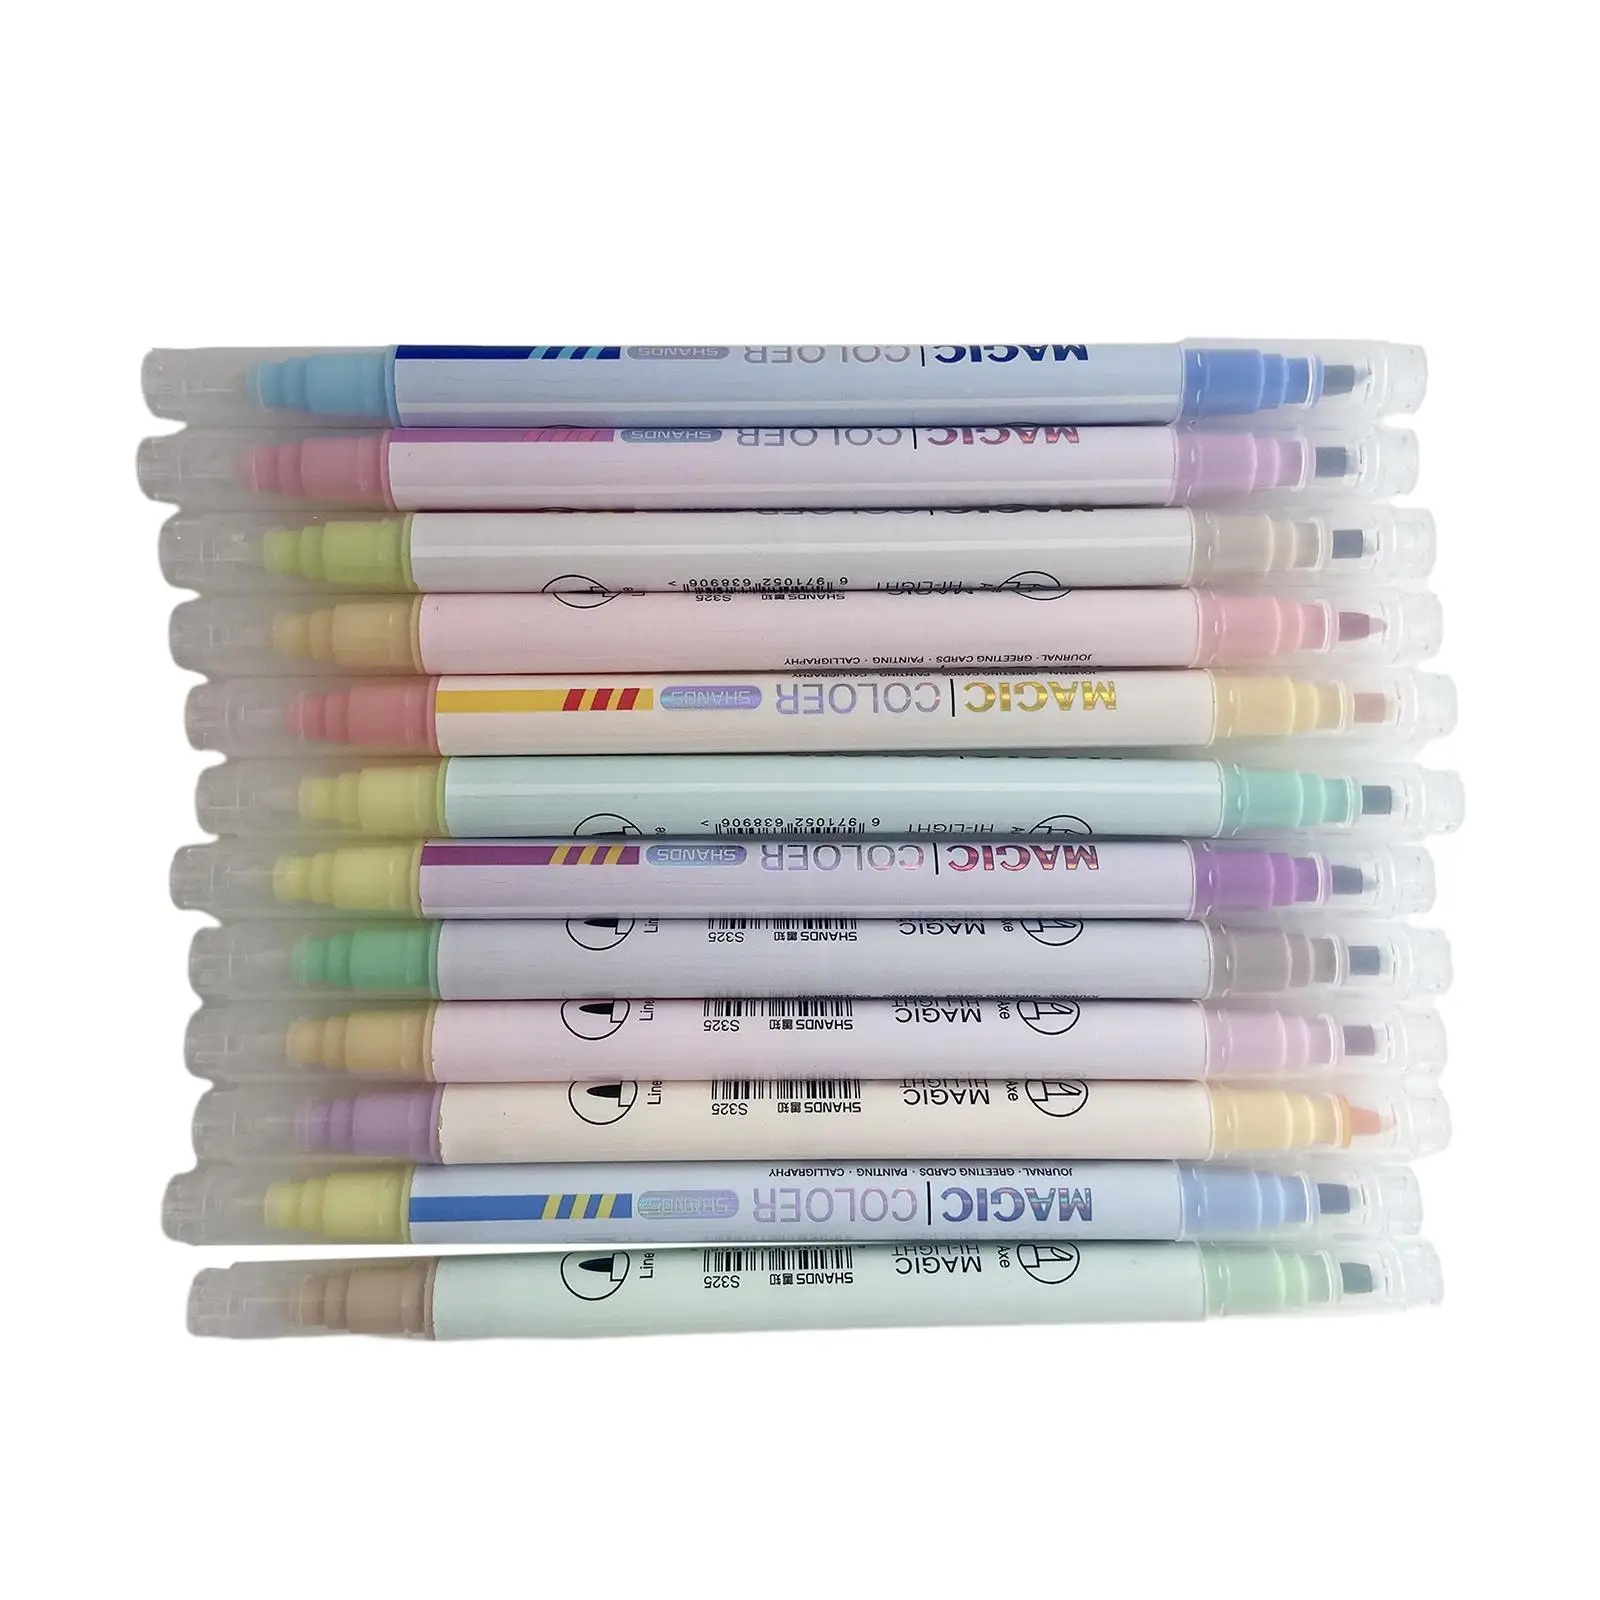 12x Marker Pens Highlighter Pen Portable Office Supplies Double Tip for Drawing Art Project Diaries Journaling Calendar Doodling